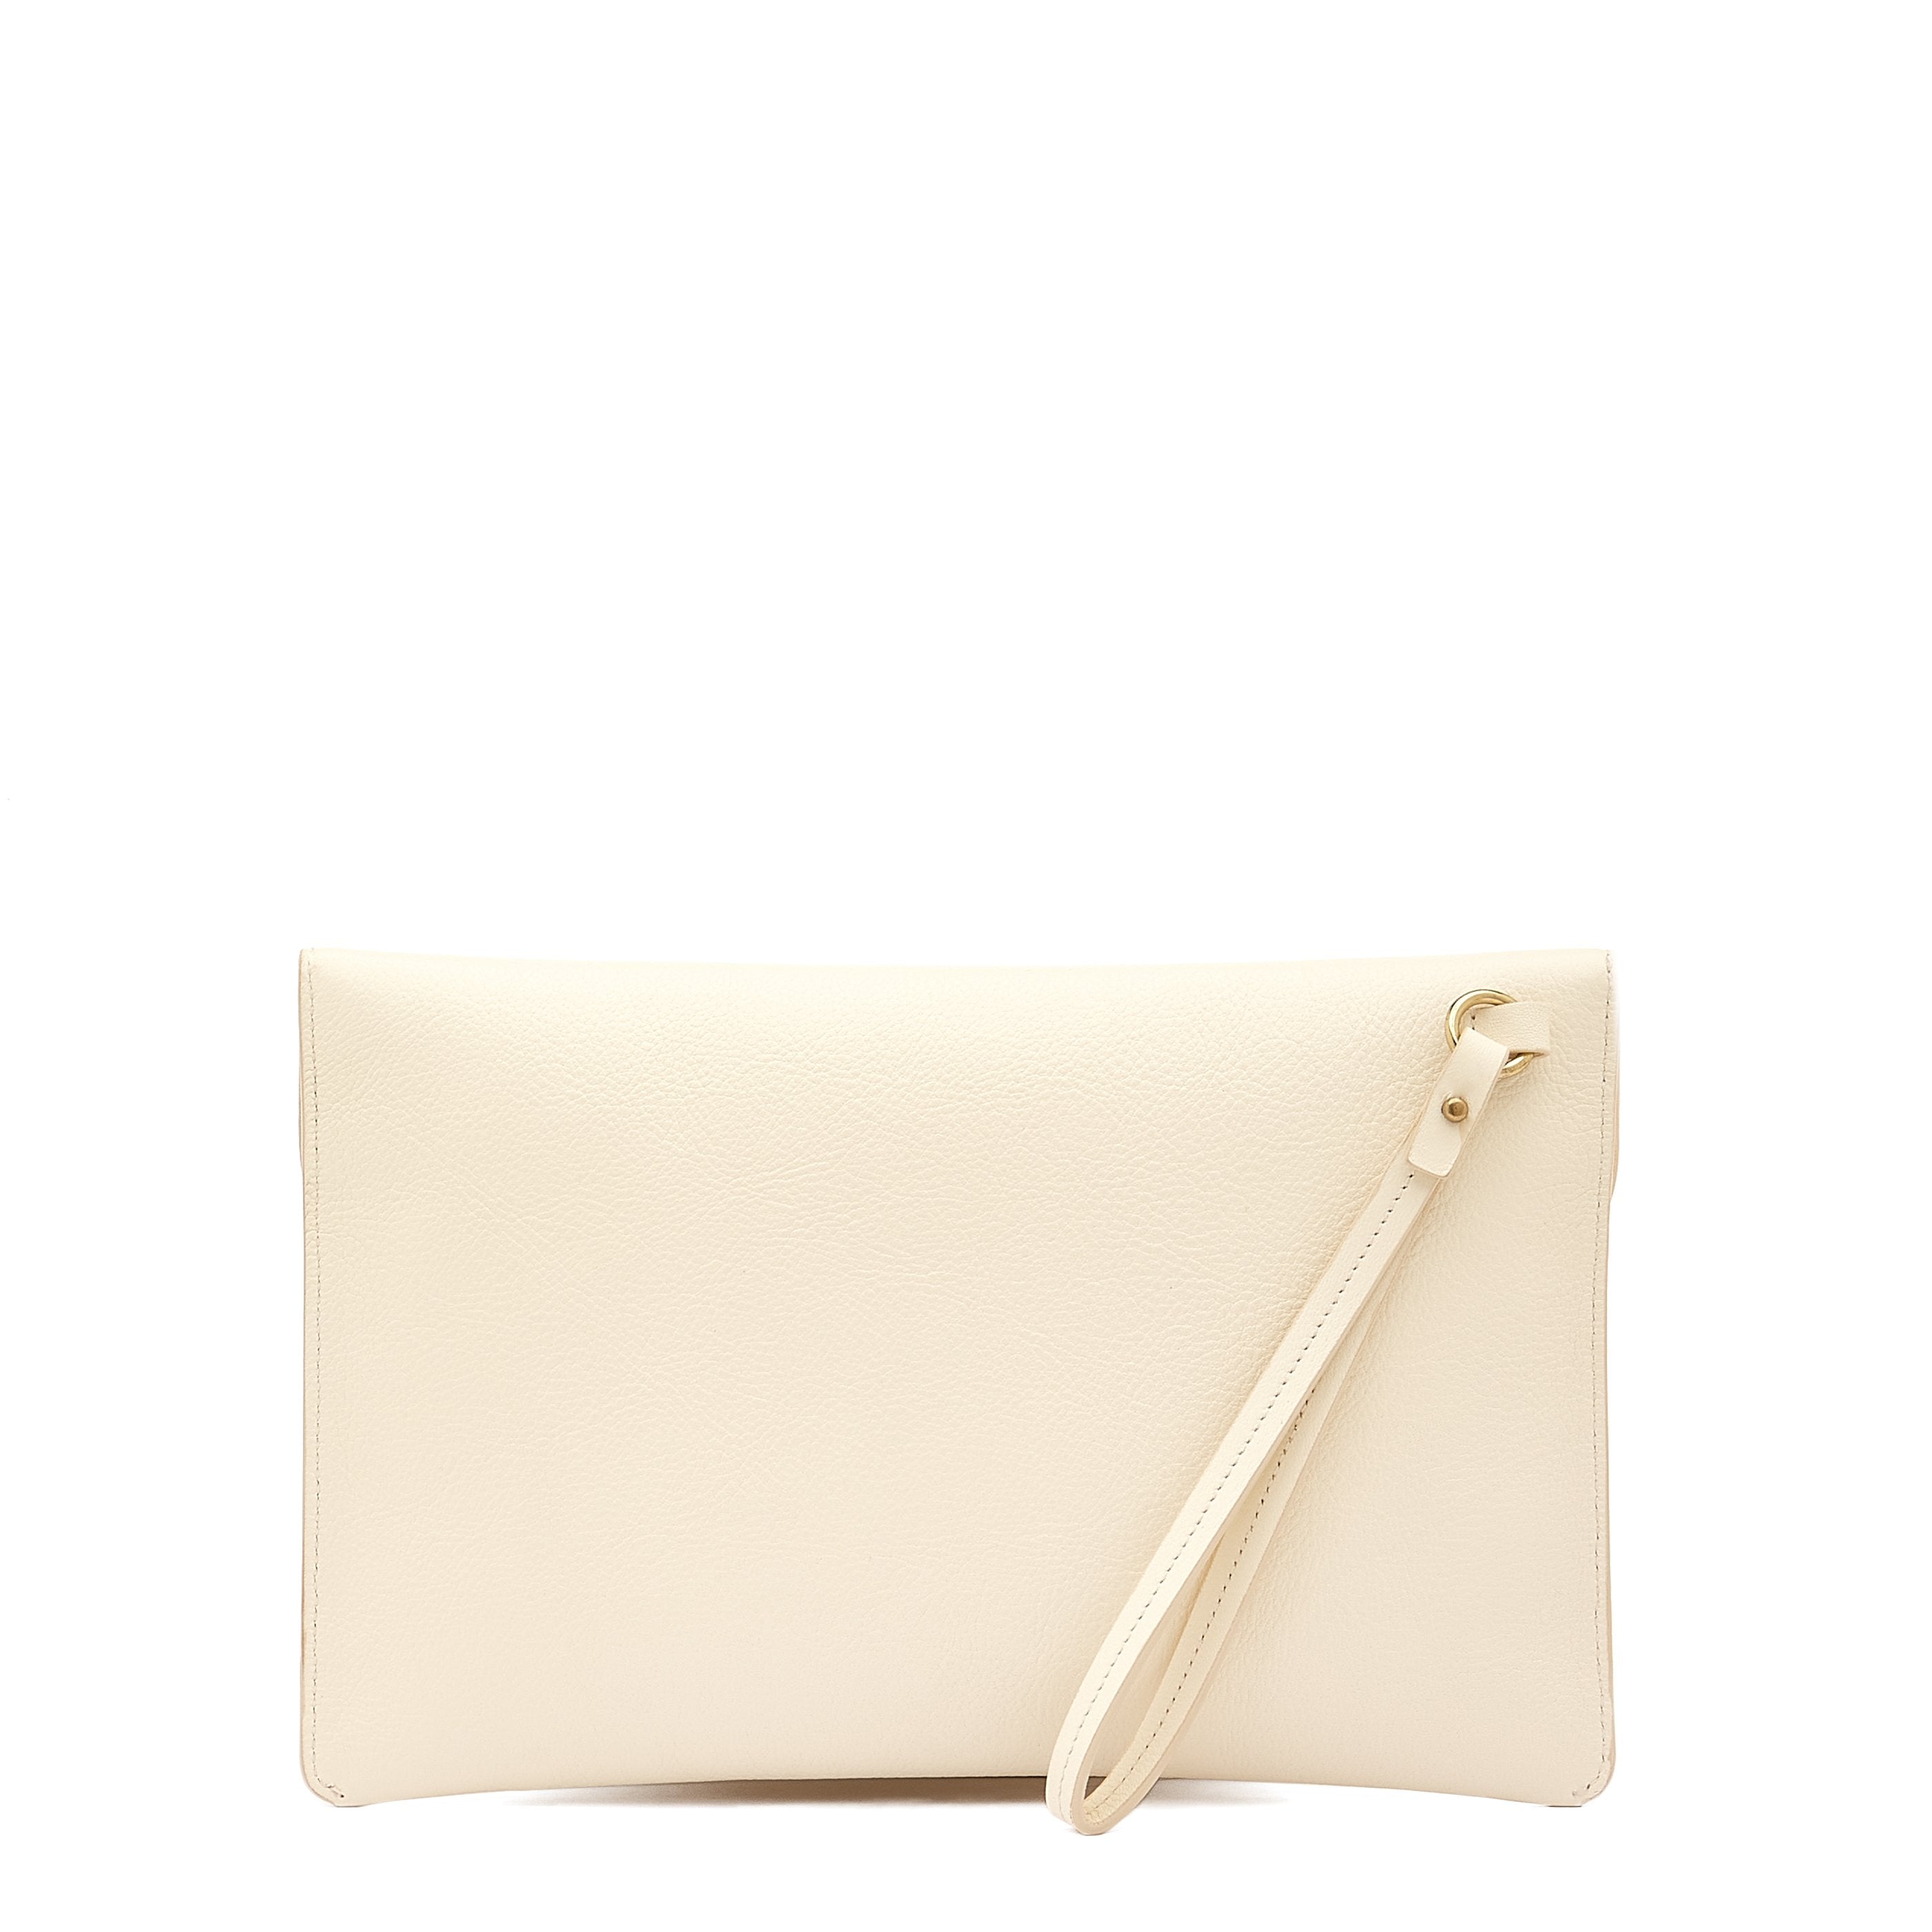 Esperia | Women's Clutch Bag in Leather color White